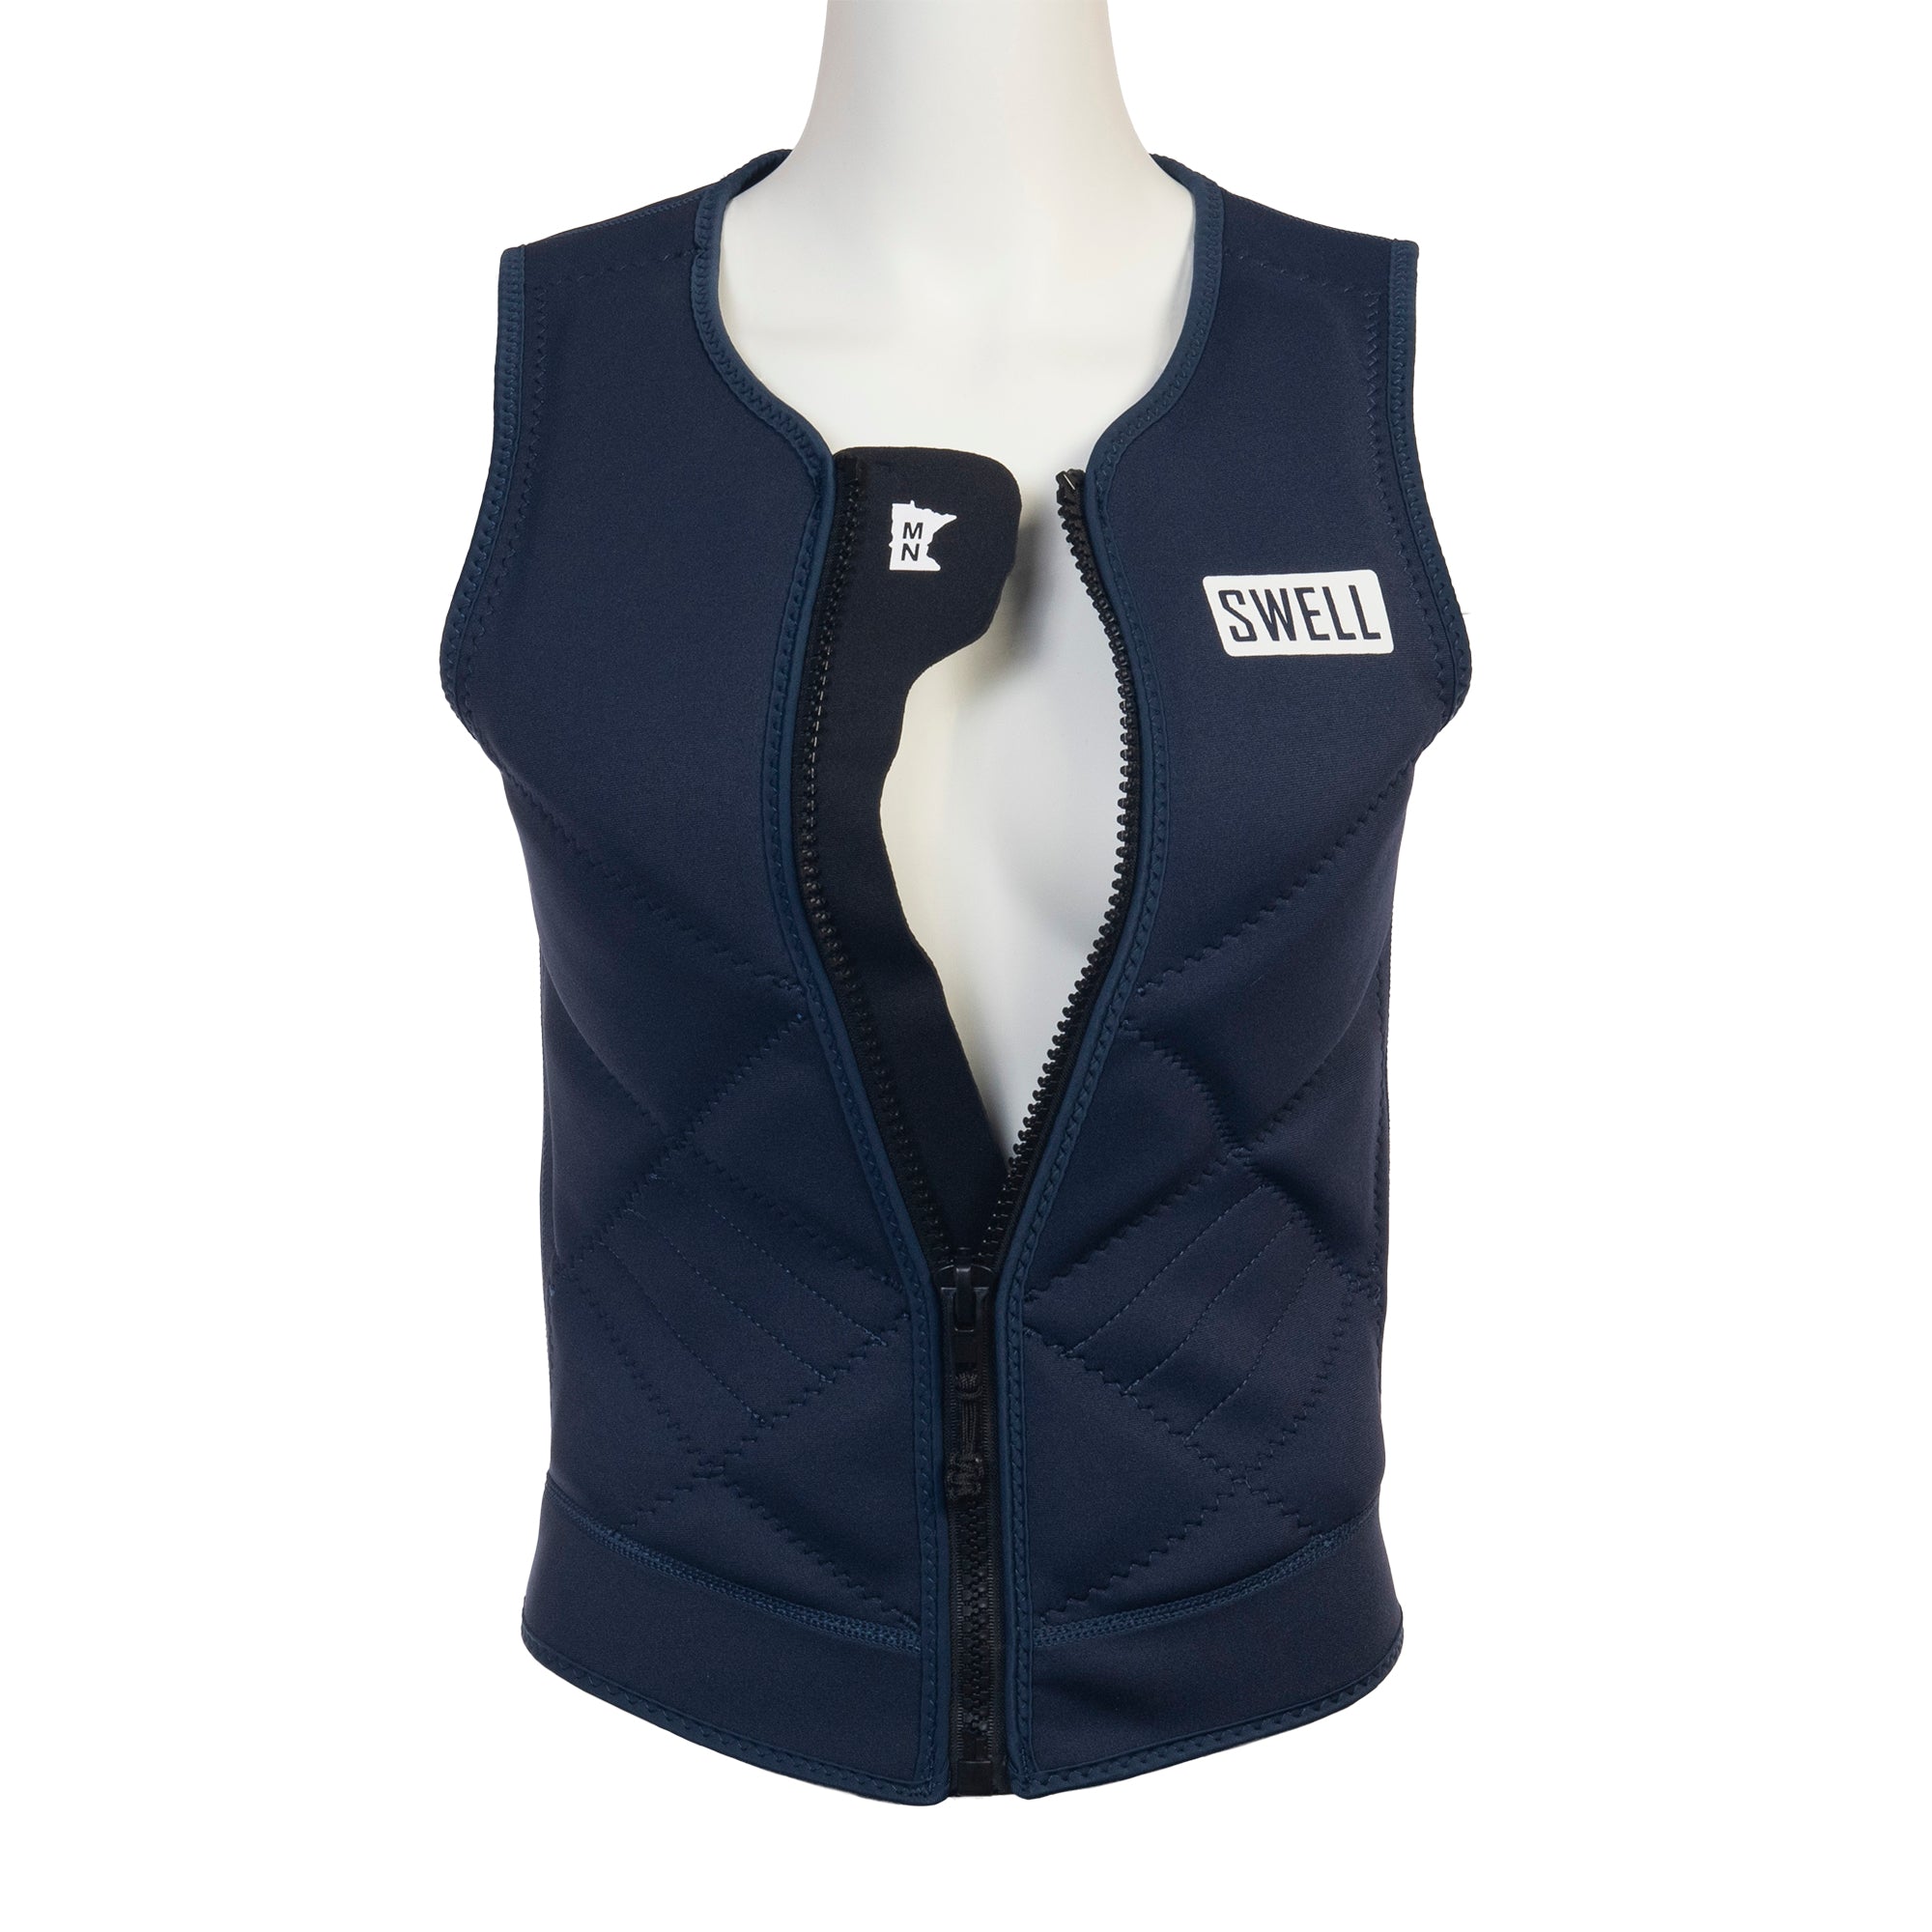 SWELL Comp Vest - Women's Navy - Neoprene Jacket - SWELL Wakesurf